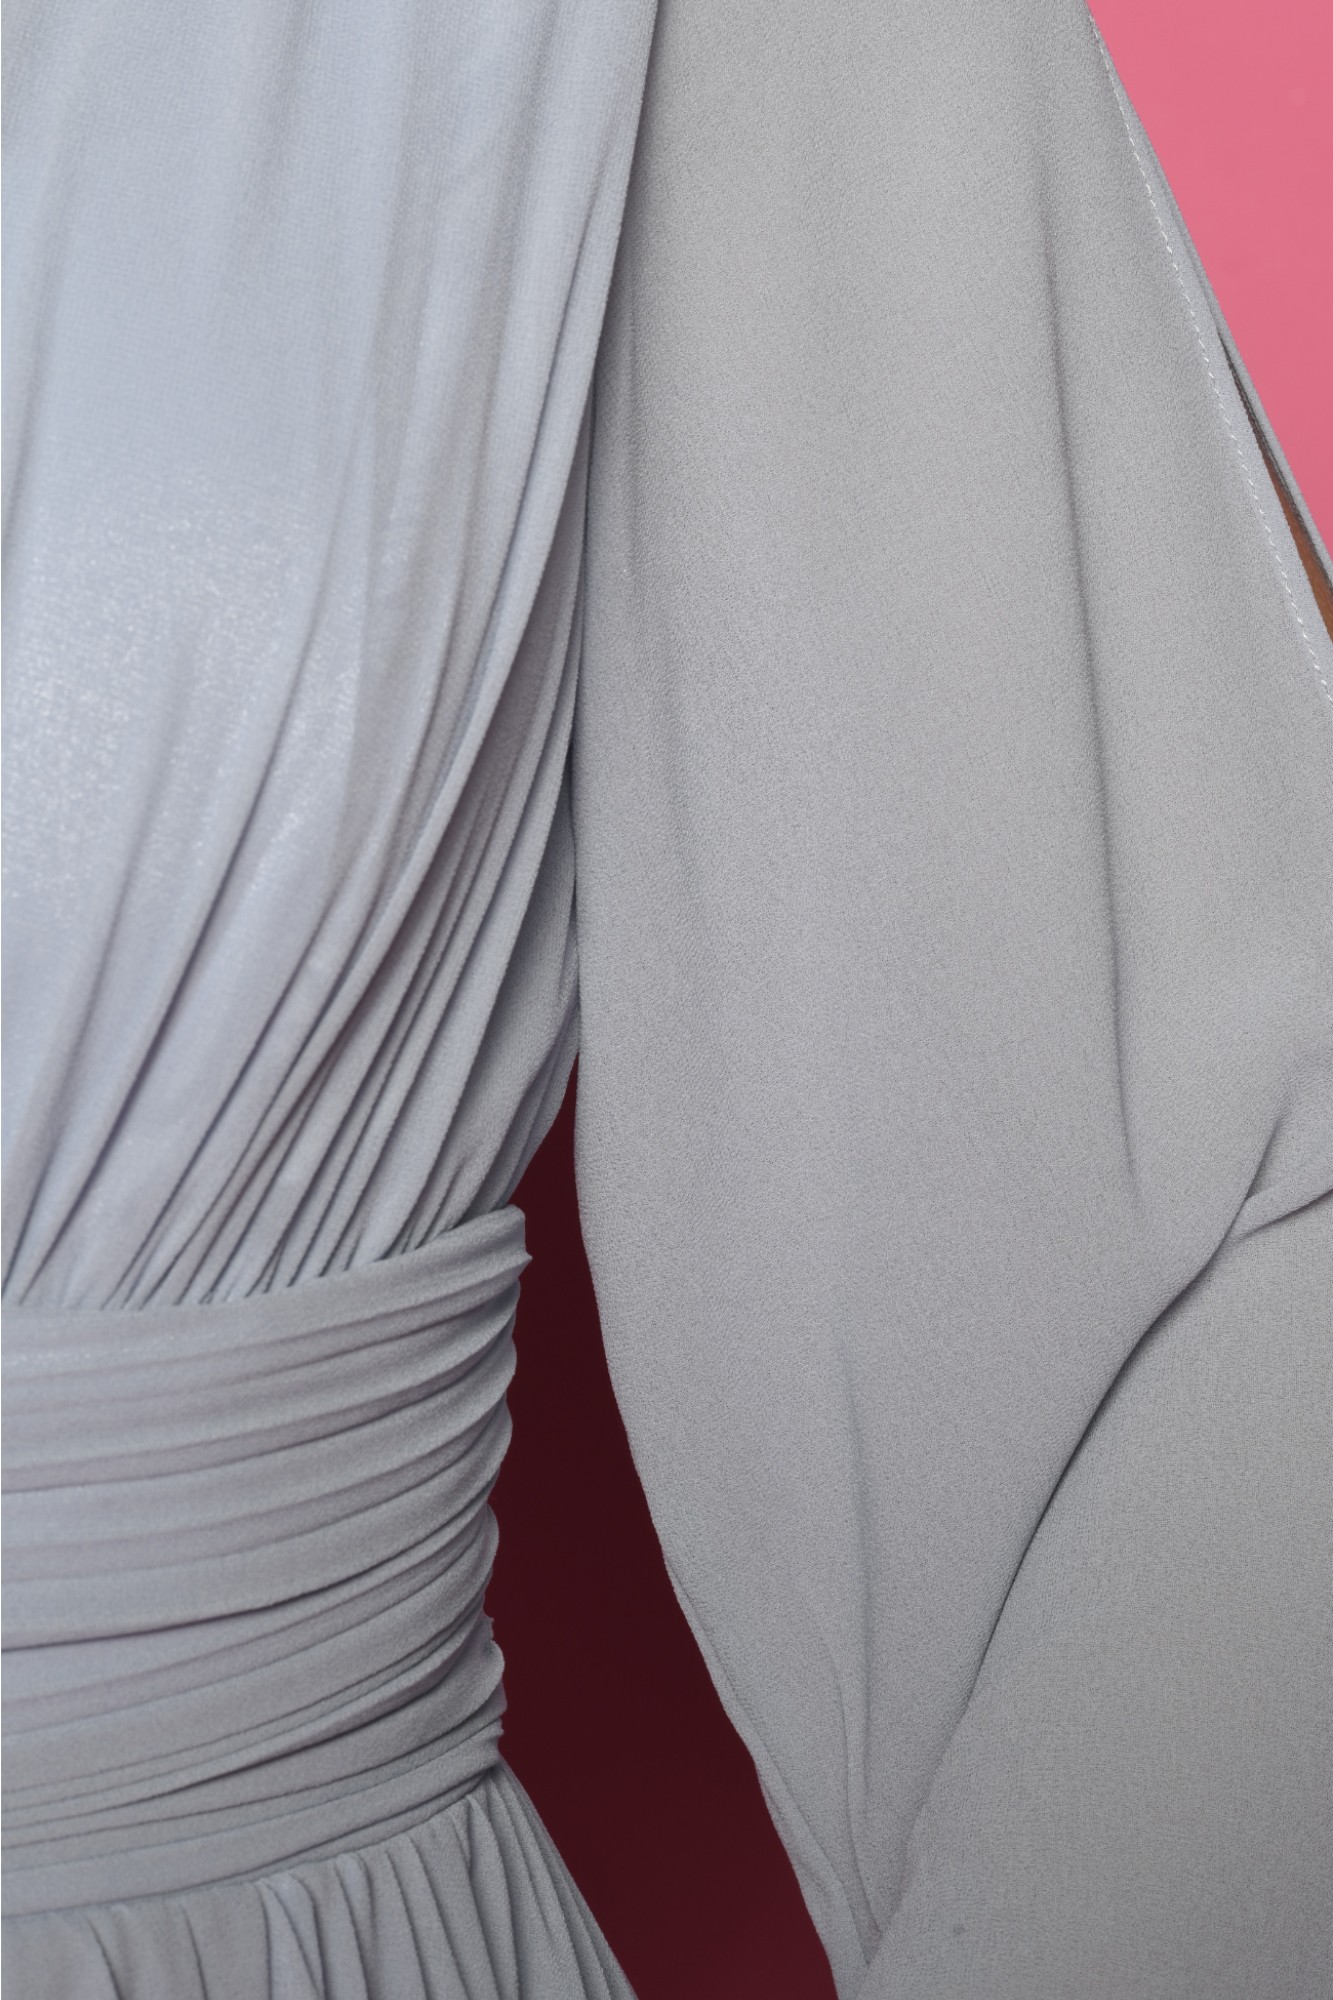 Robe de Coeur - Robe de soirée - robe de mariée - robe de cérémonie- robe de demoiselle d’honneur - Albi - Tarn - robe neuve - petit budget